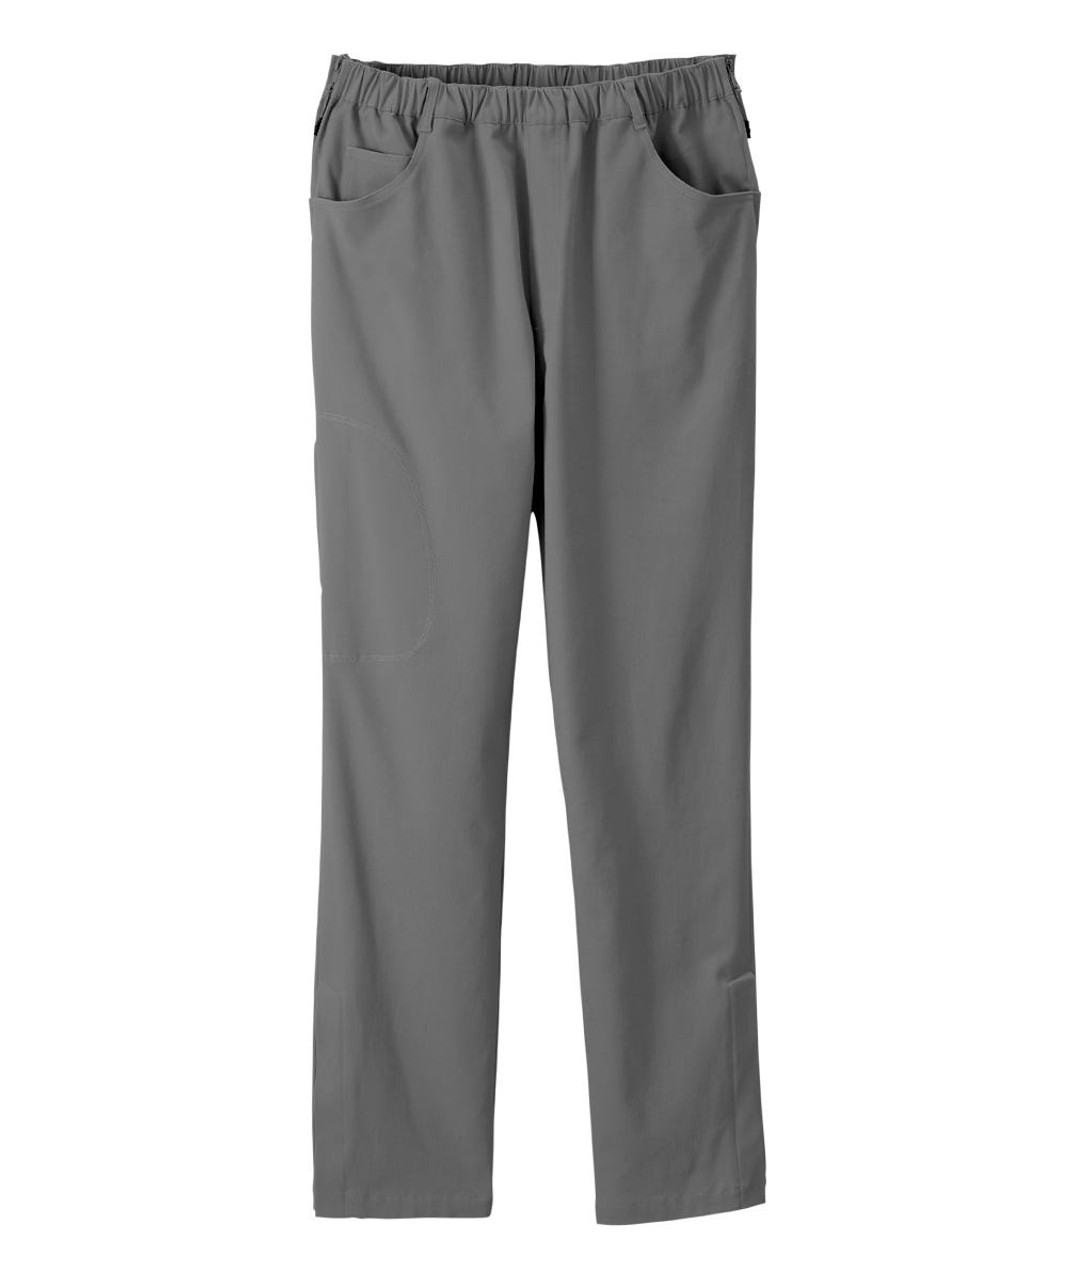 Silverts SV044 Senior Men's Side Zip Adaptive Pant Grey, Size=3XL, SV044-SV18-3XL